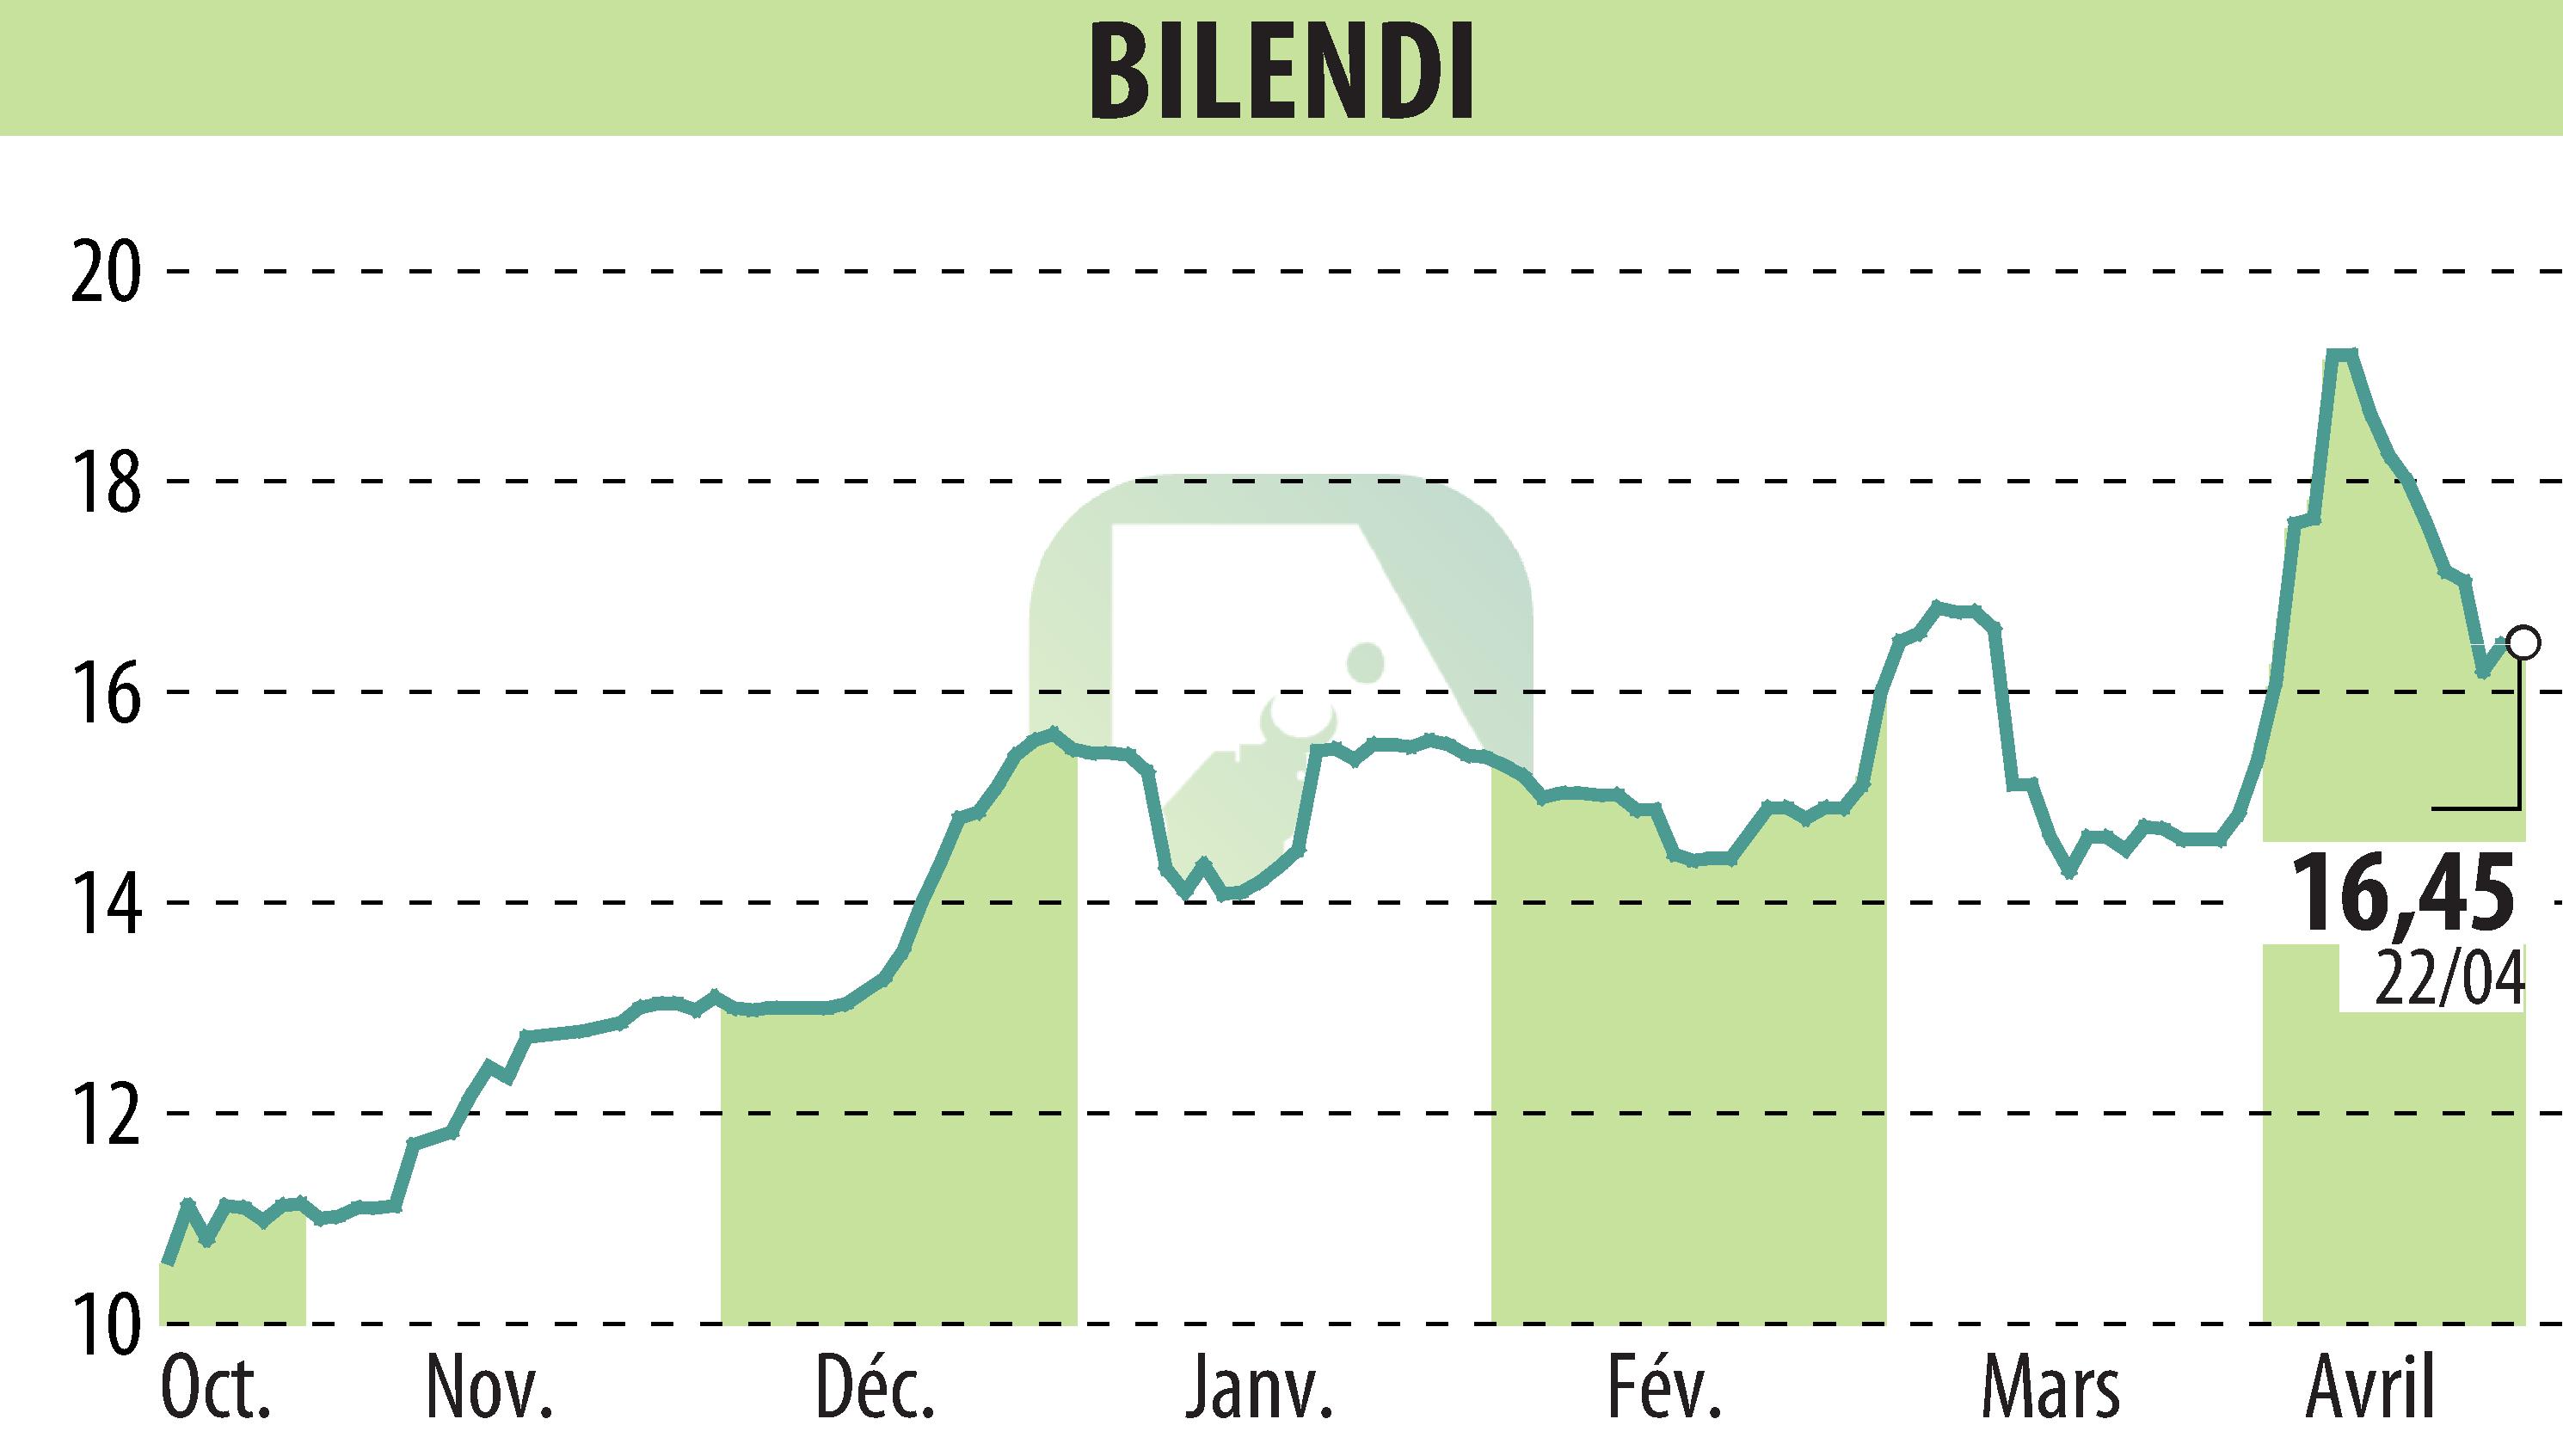 Stock price chart of BILENDI (EPA:ALBLD) showing fluctuations.